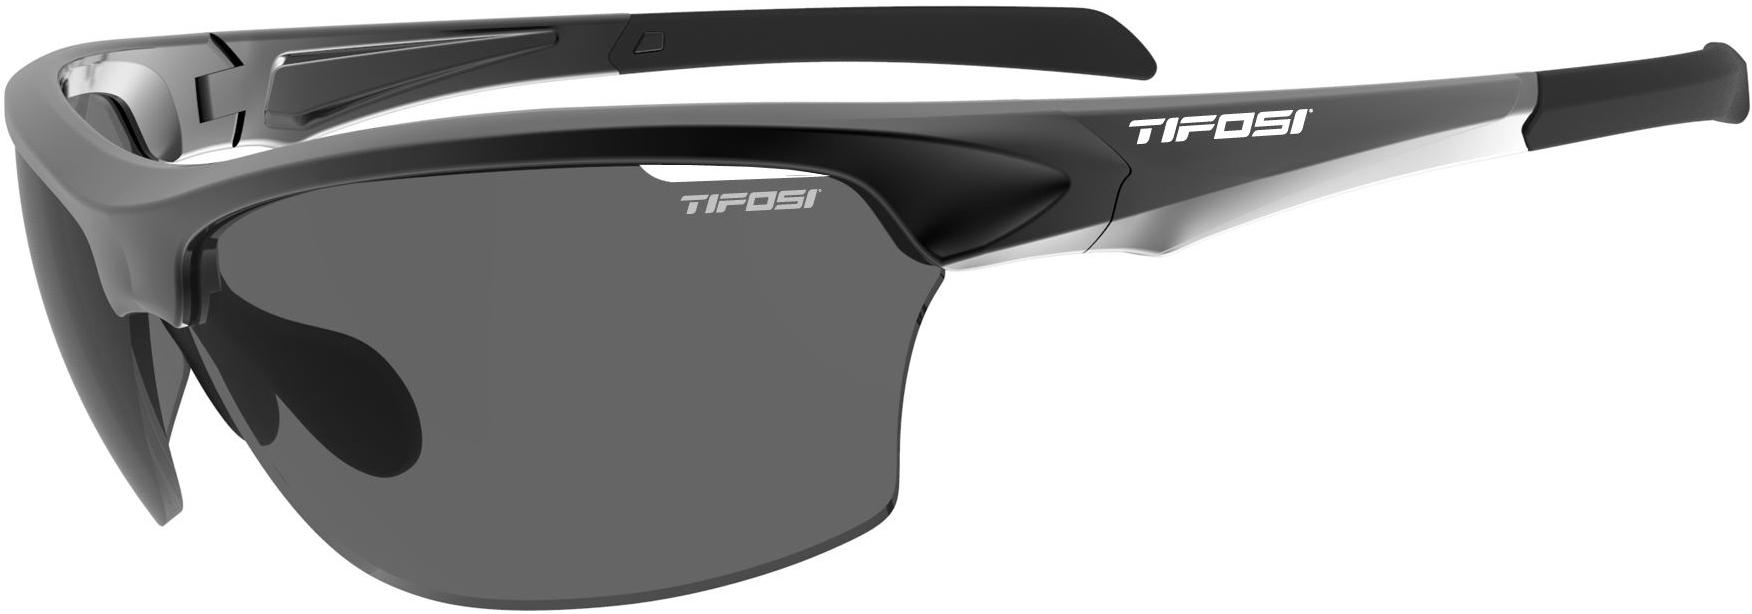 Tifosi Intense Single Lens Sunglasses  Black